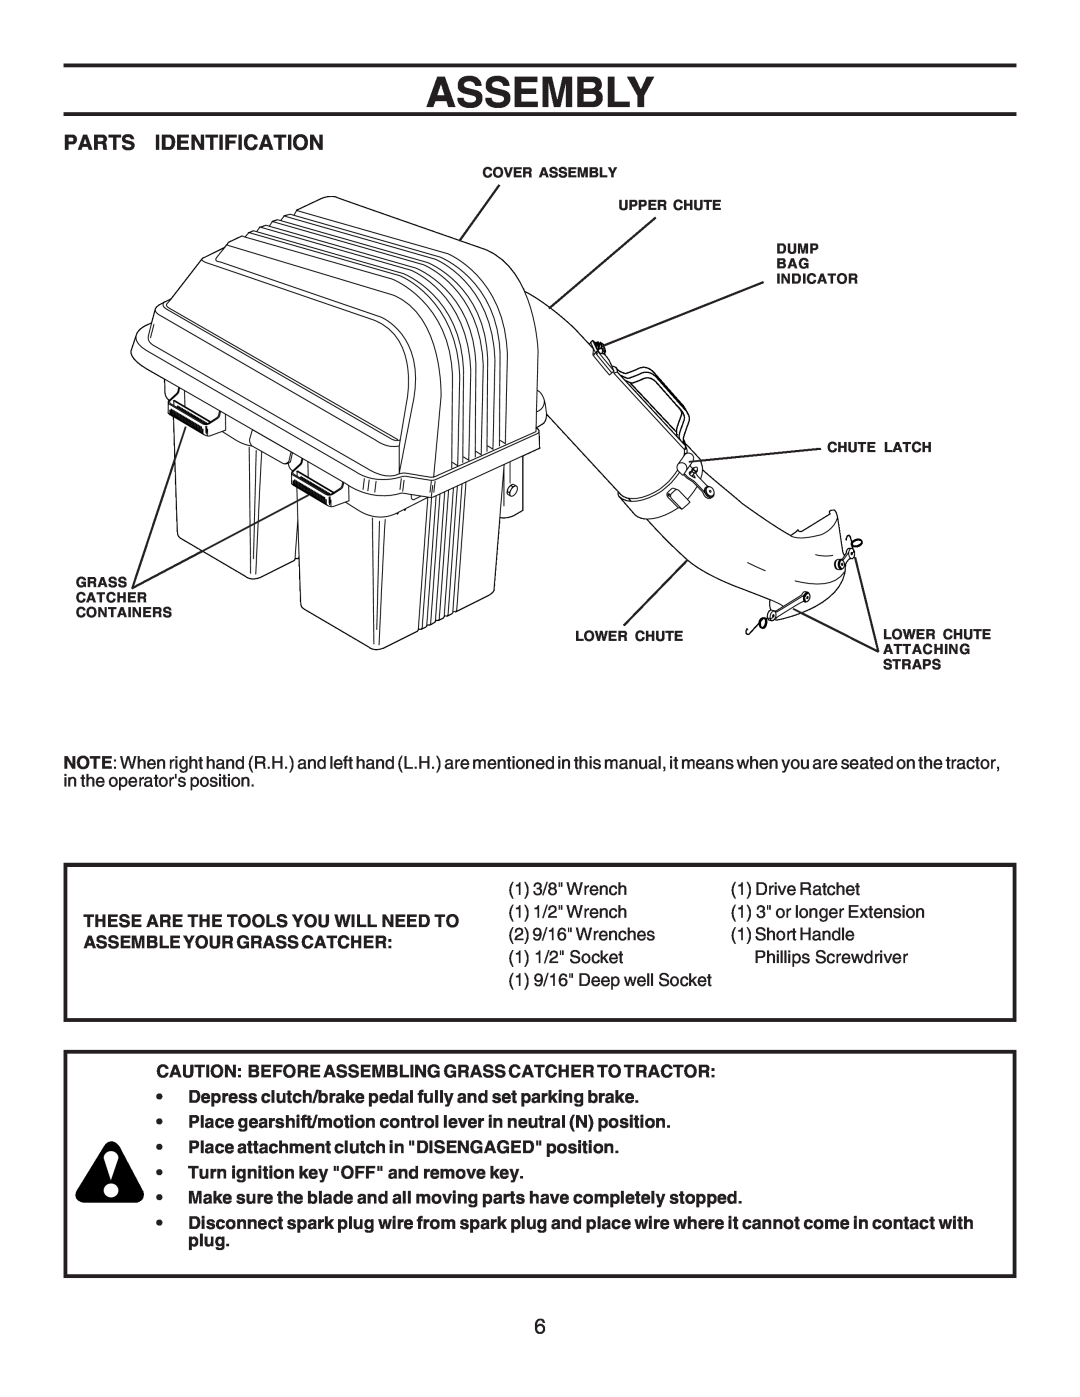 Husqvarna CL36A manual Assembly, Parts Identification 